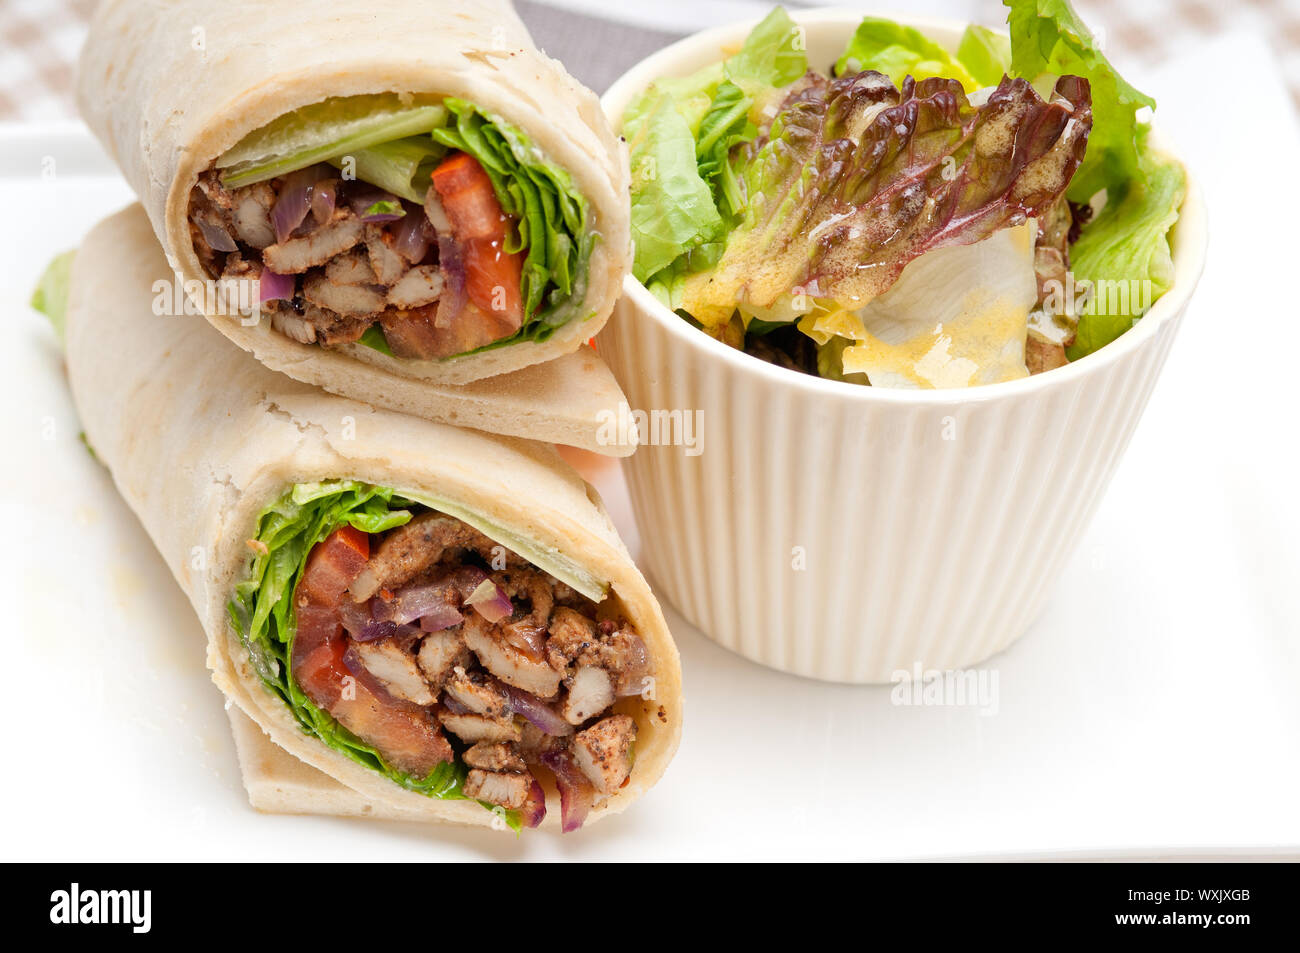 kafta shawarma chicken pita wrap roll sandwich traditional arab mid east  food Stock Photo - Alamy